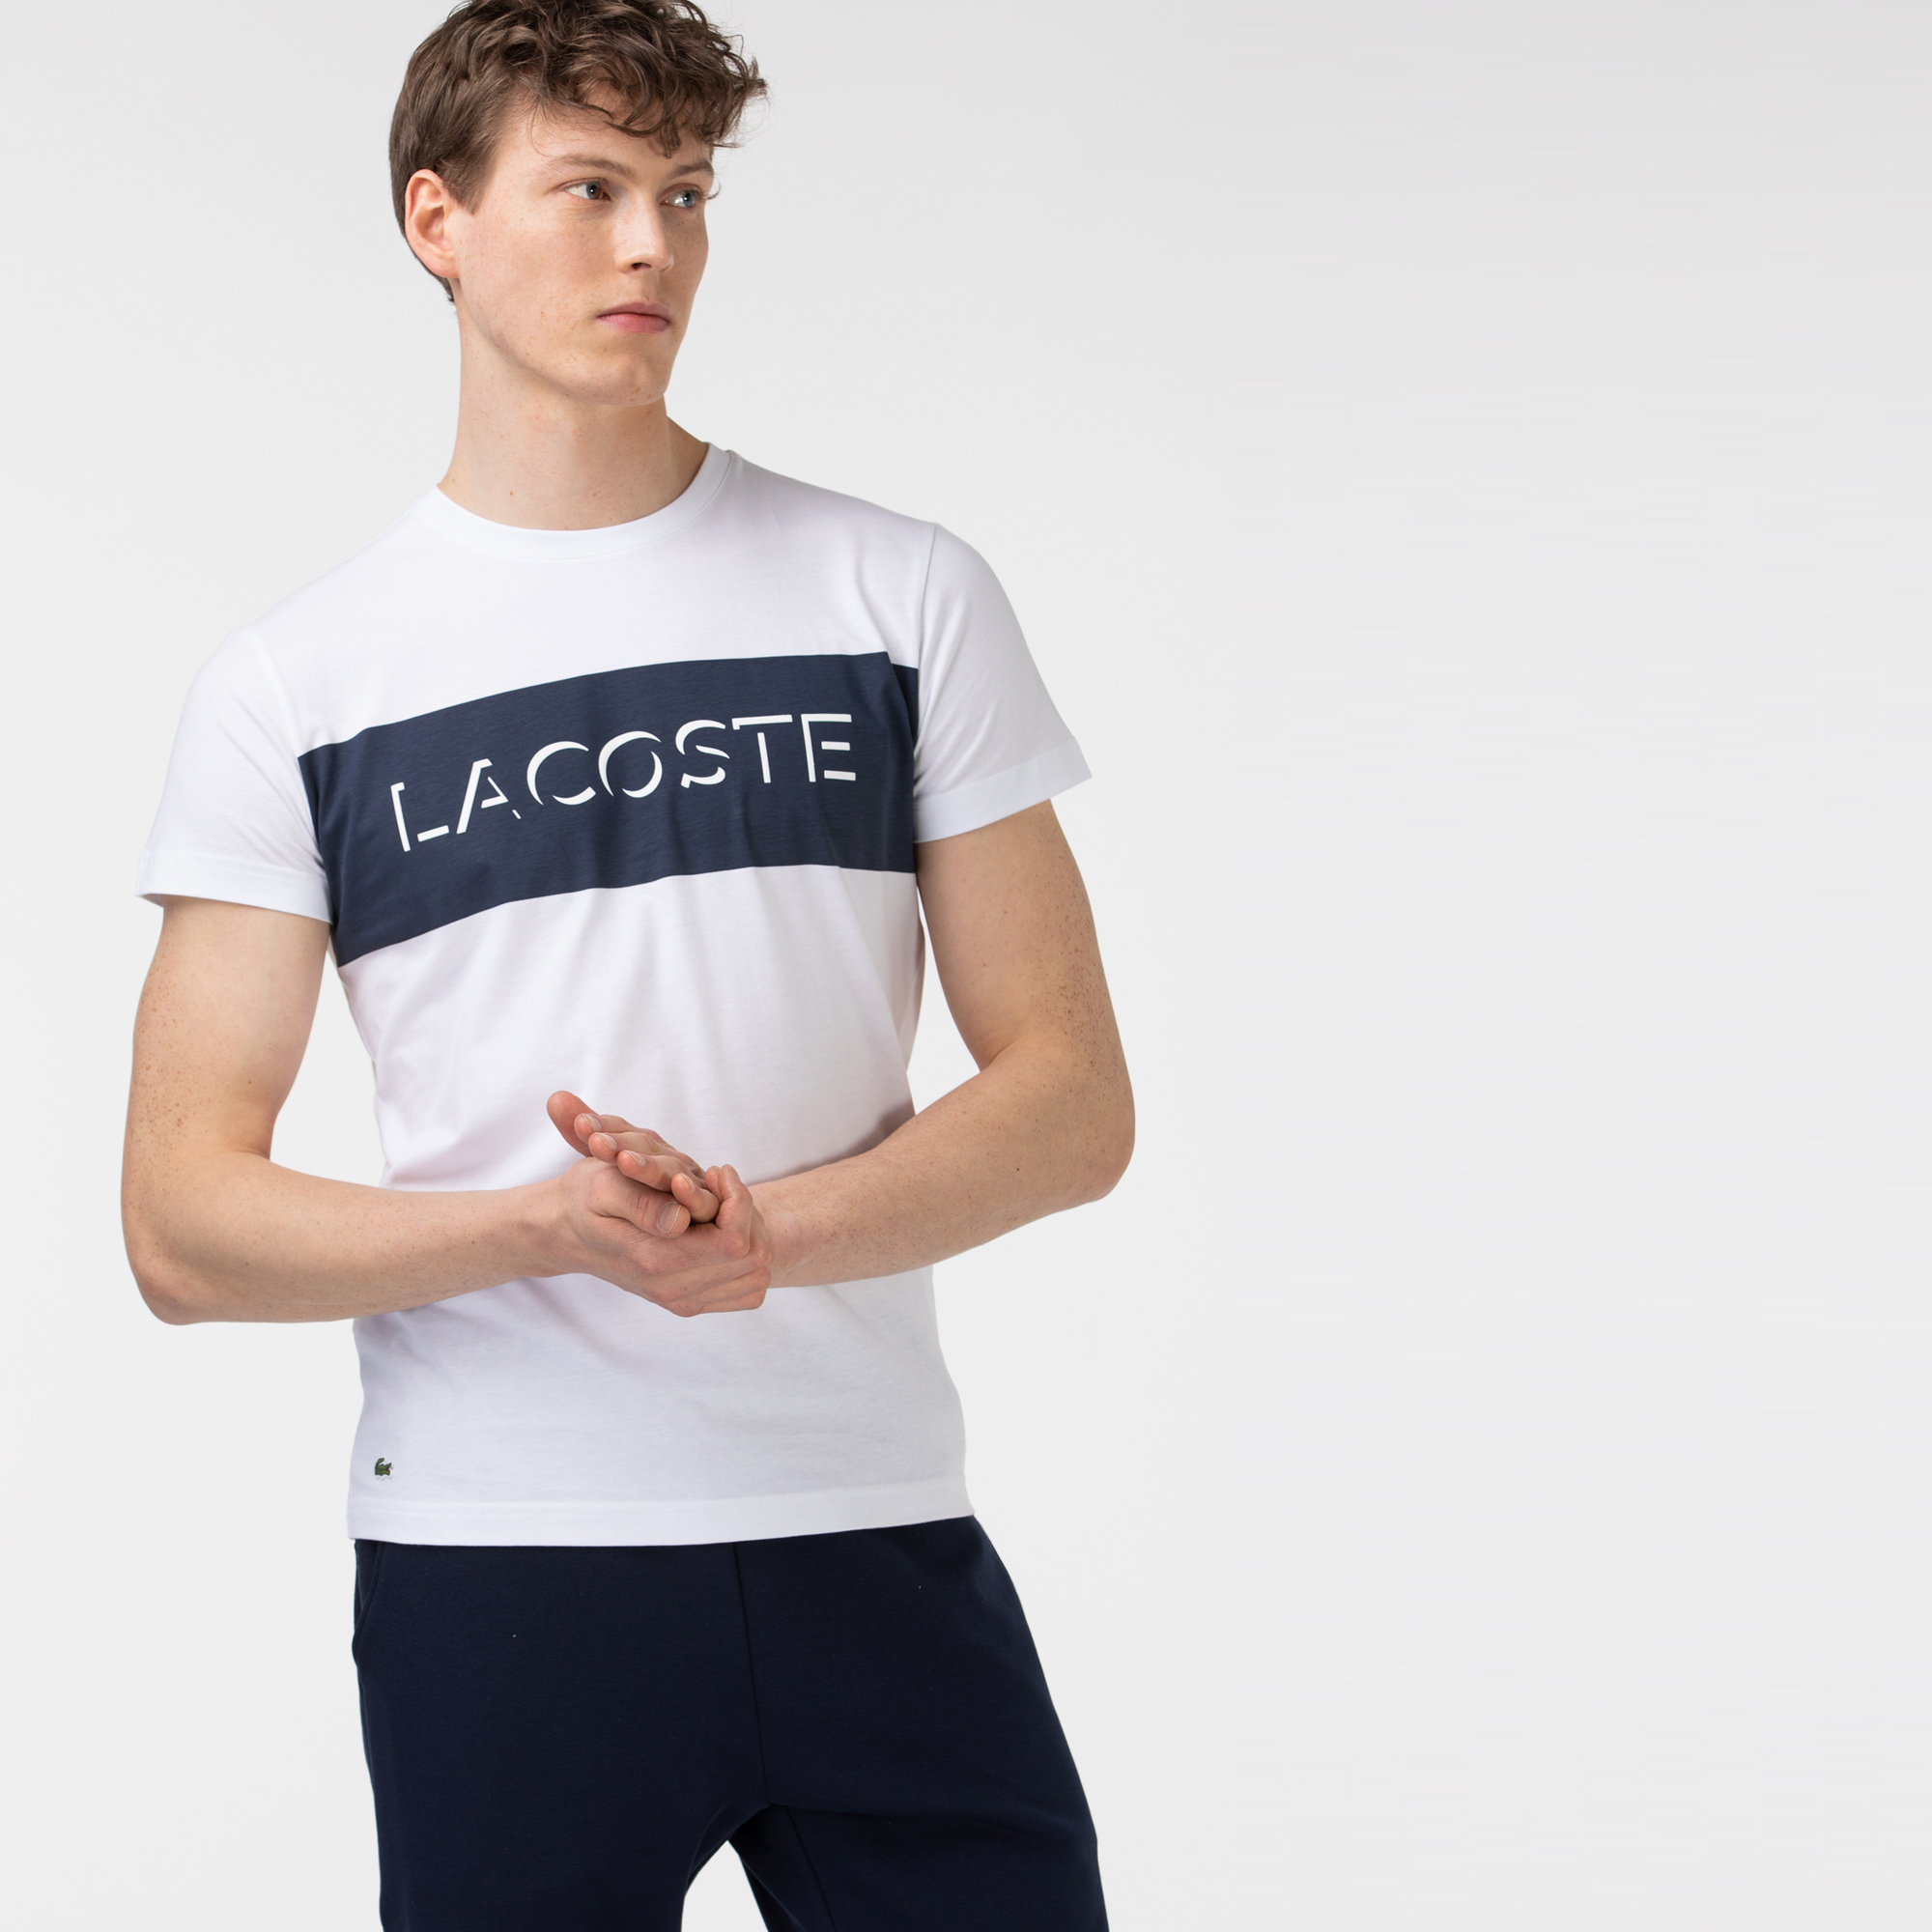 lacoste size 40 shirt